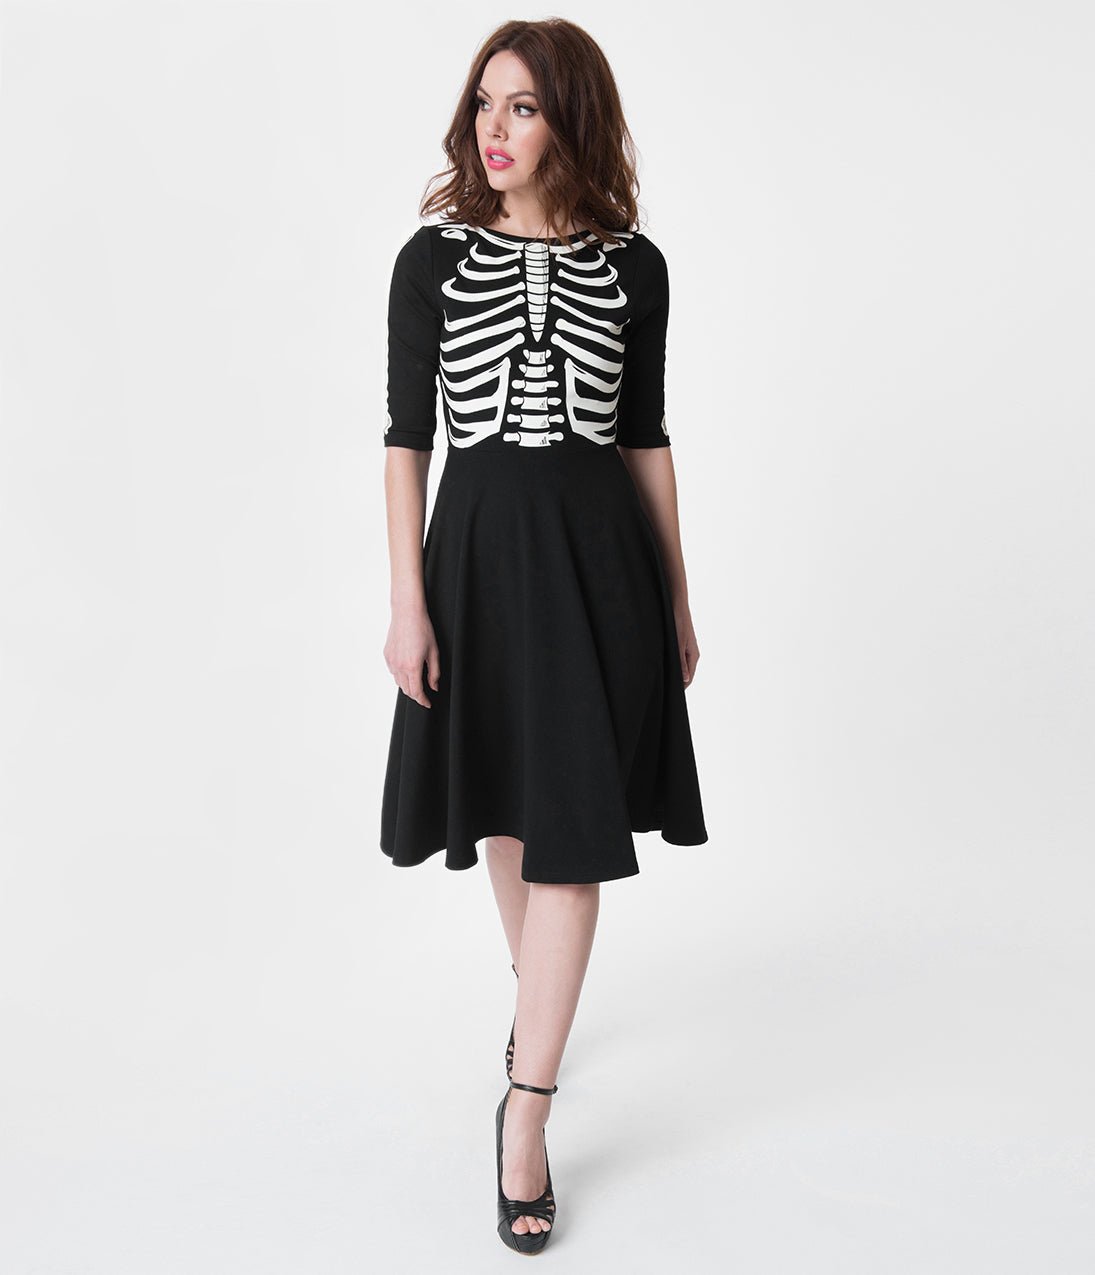 Black Skeleton Swing Dress - Rockamilly-Dresses-Vintage